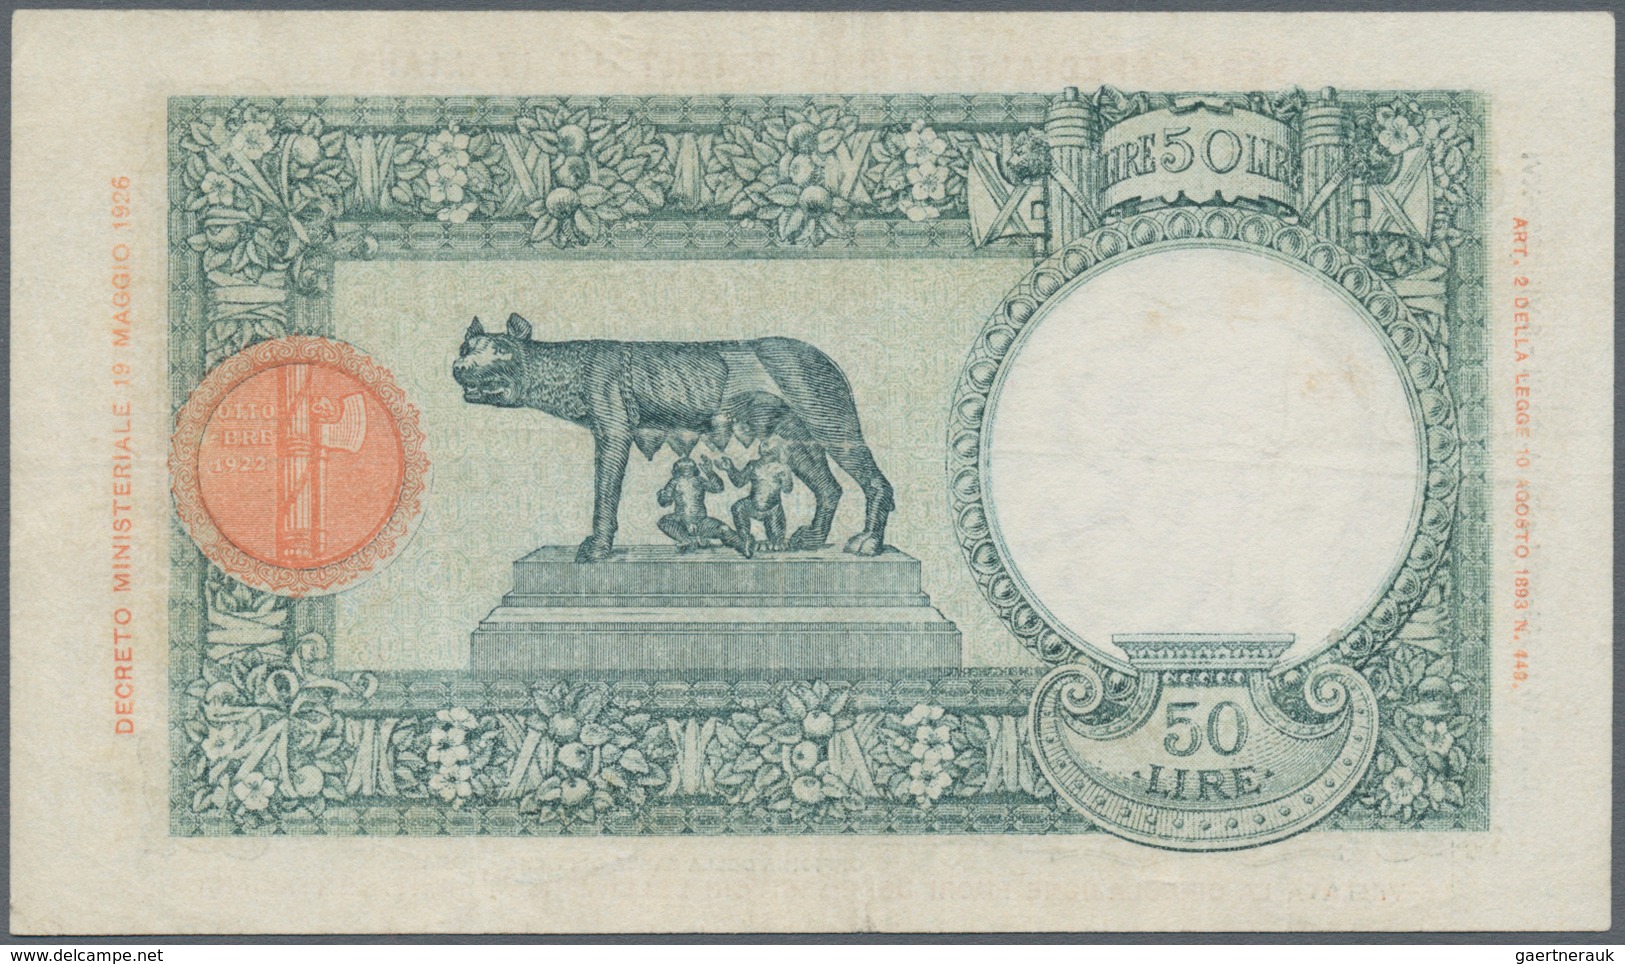 Italian East Africa / Italienisch Ost-Afrika: 50 Lire 1939 P. 1, Light Vertial And Horizontal Folds - Italiaans Oost-Afrika